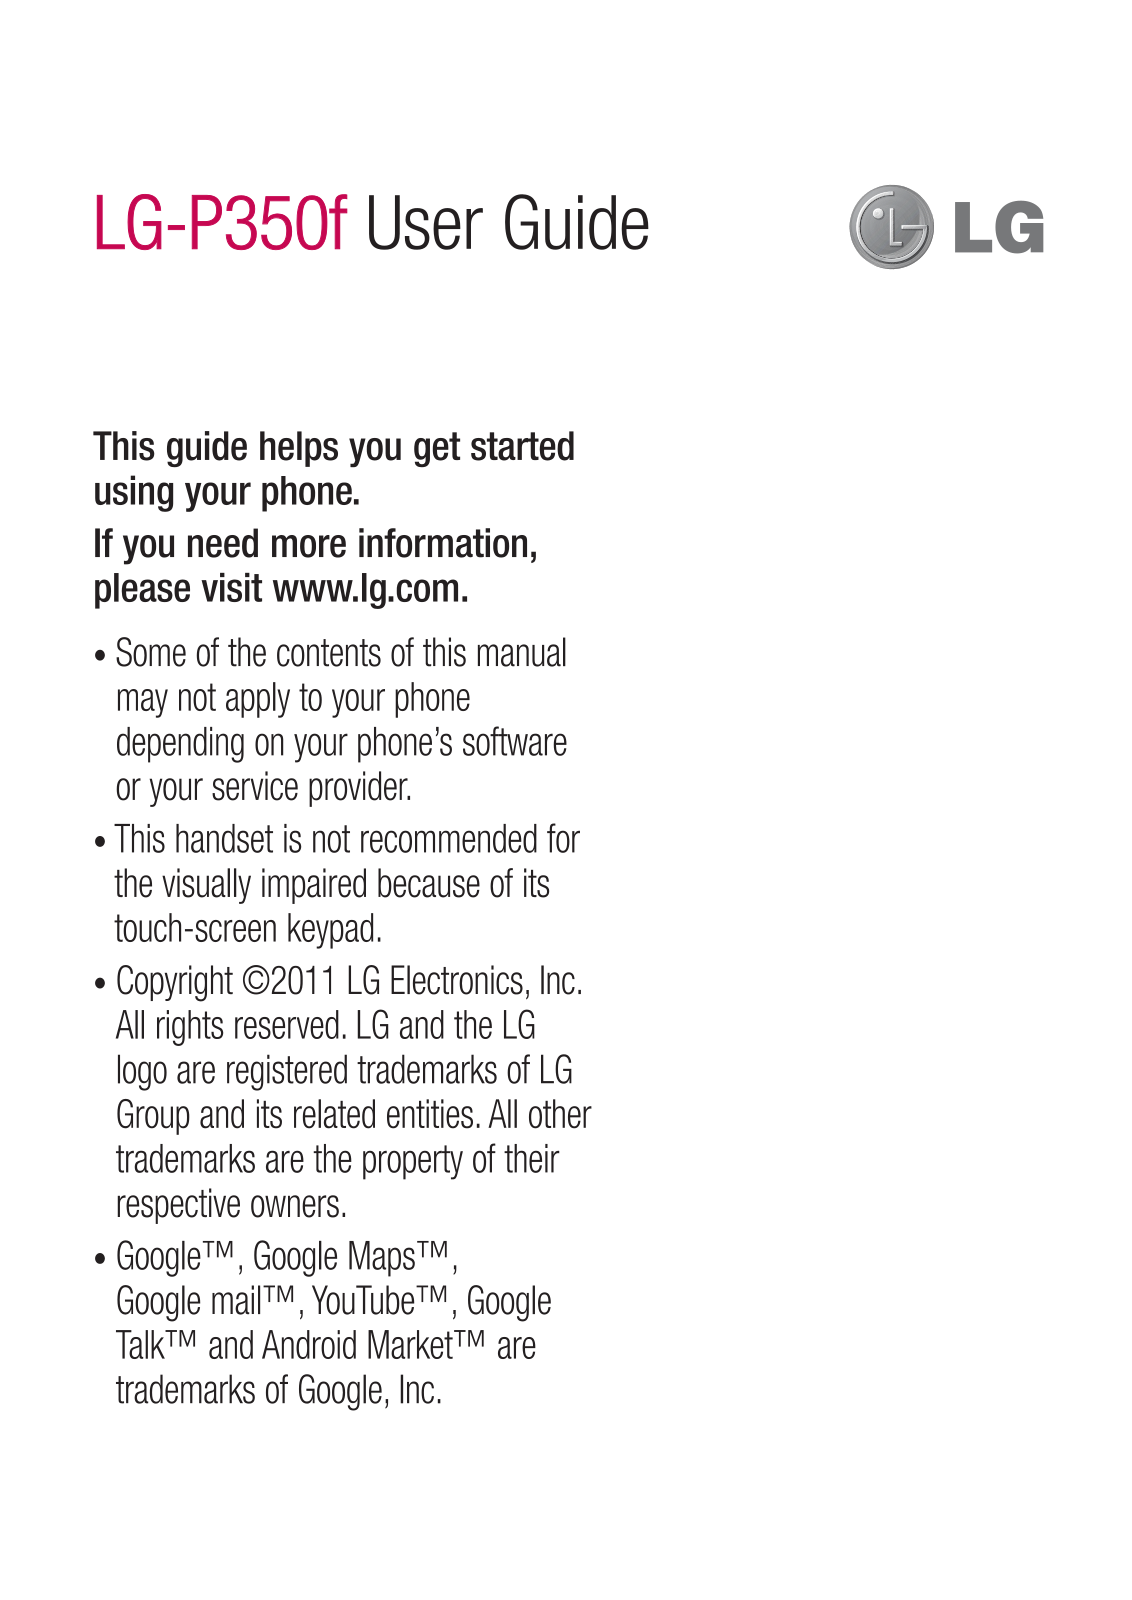 LG P350F Users manual